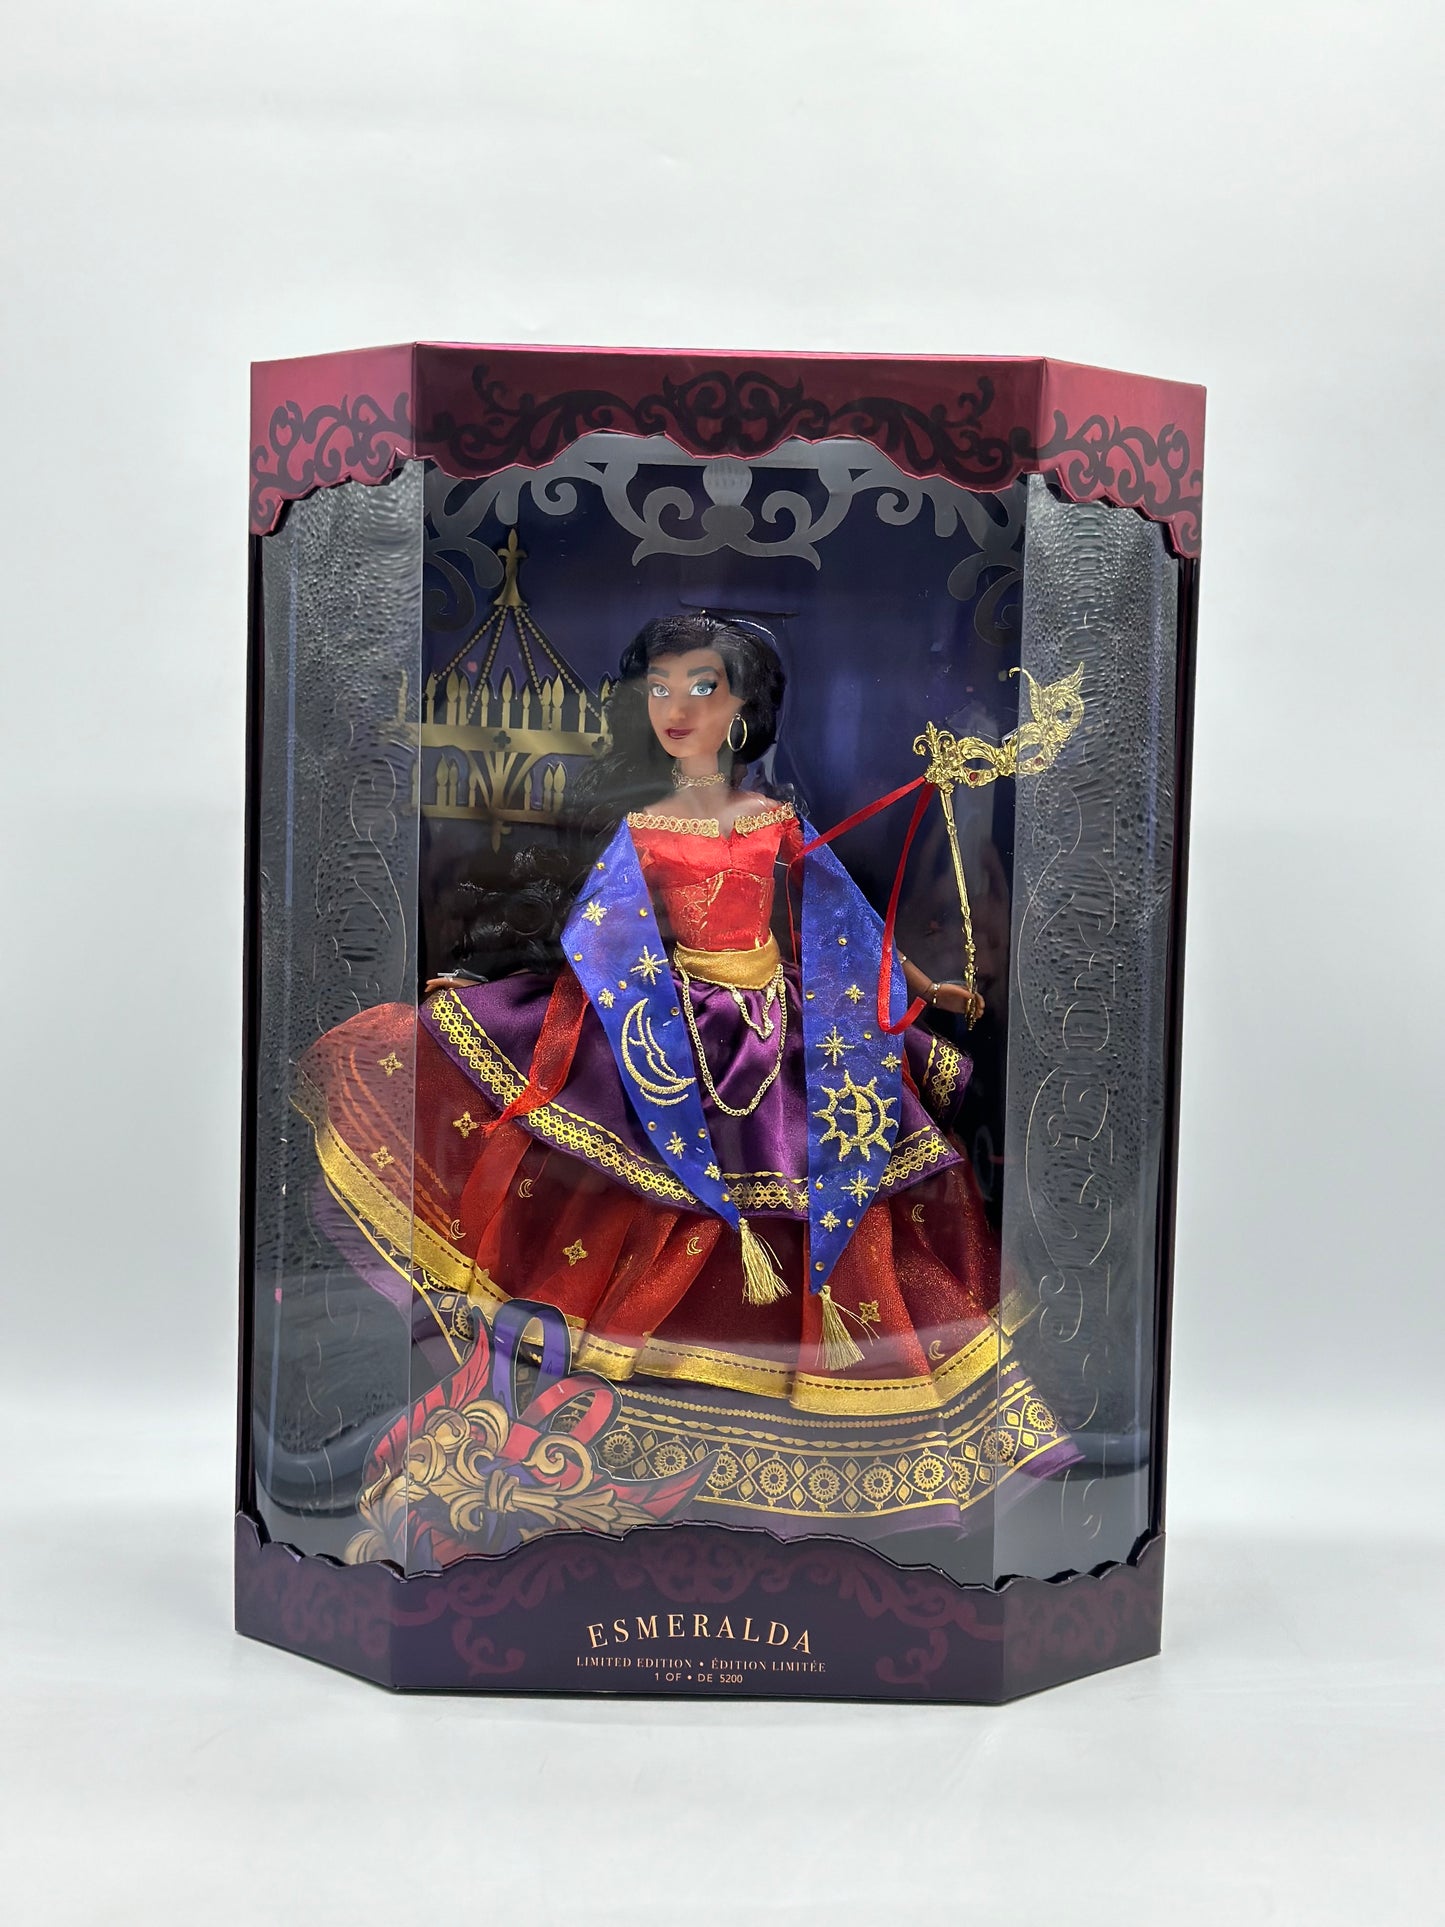 Disney Designer Collection Midnight Masquerade Series Esmeralda Limited Edition Doll